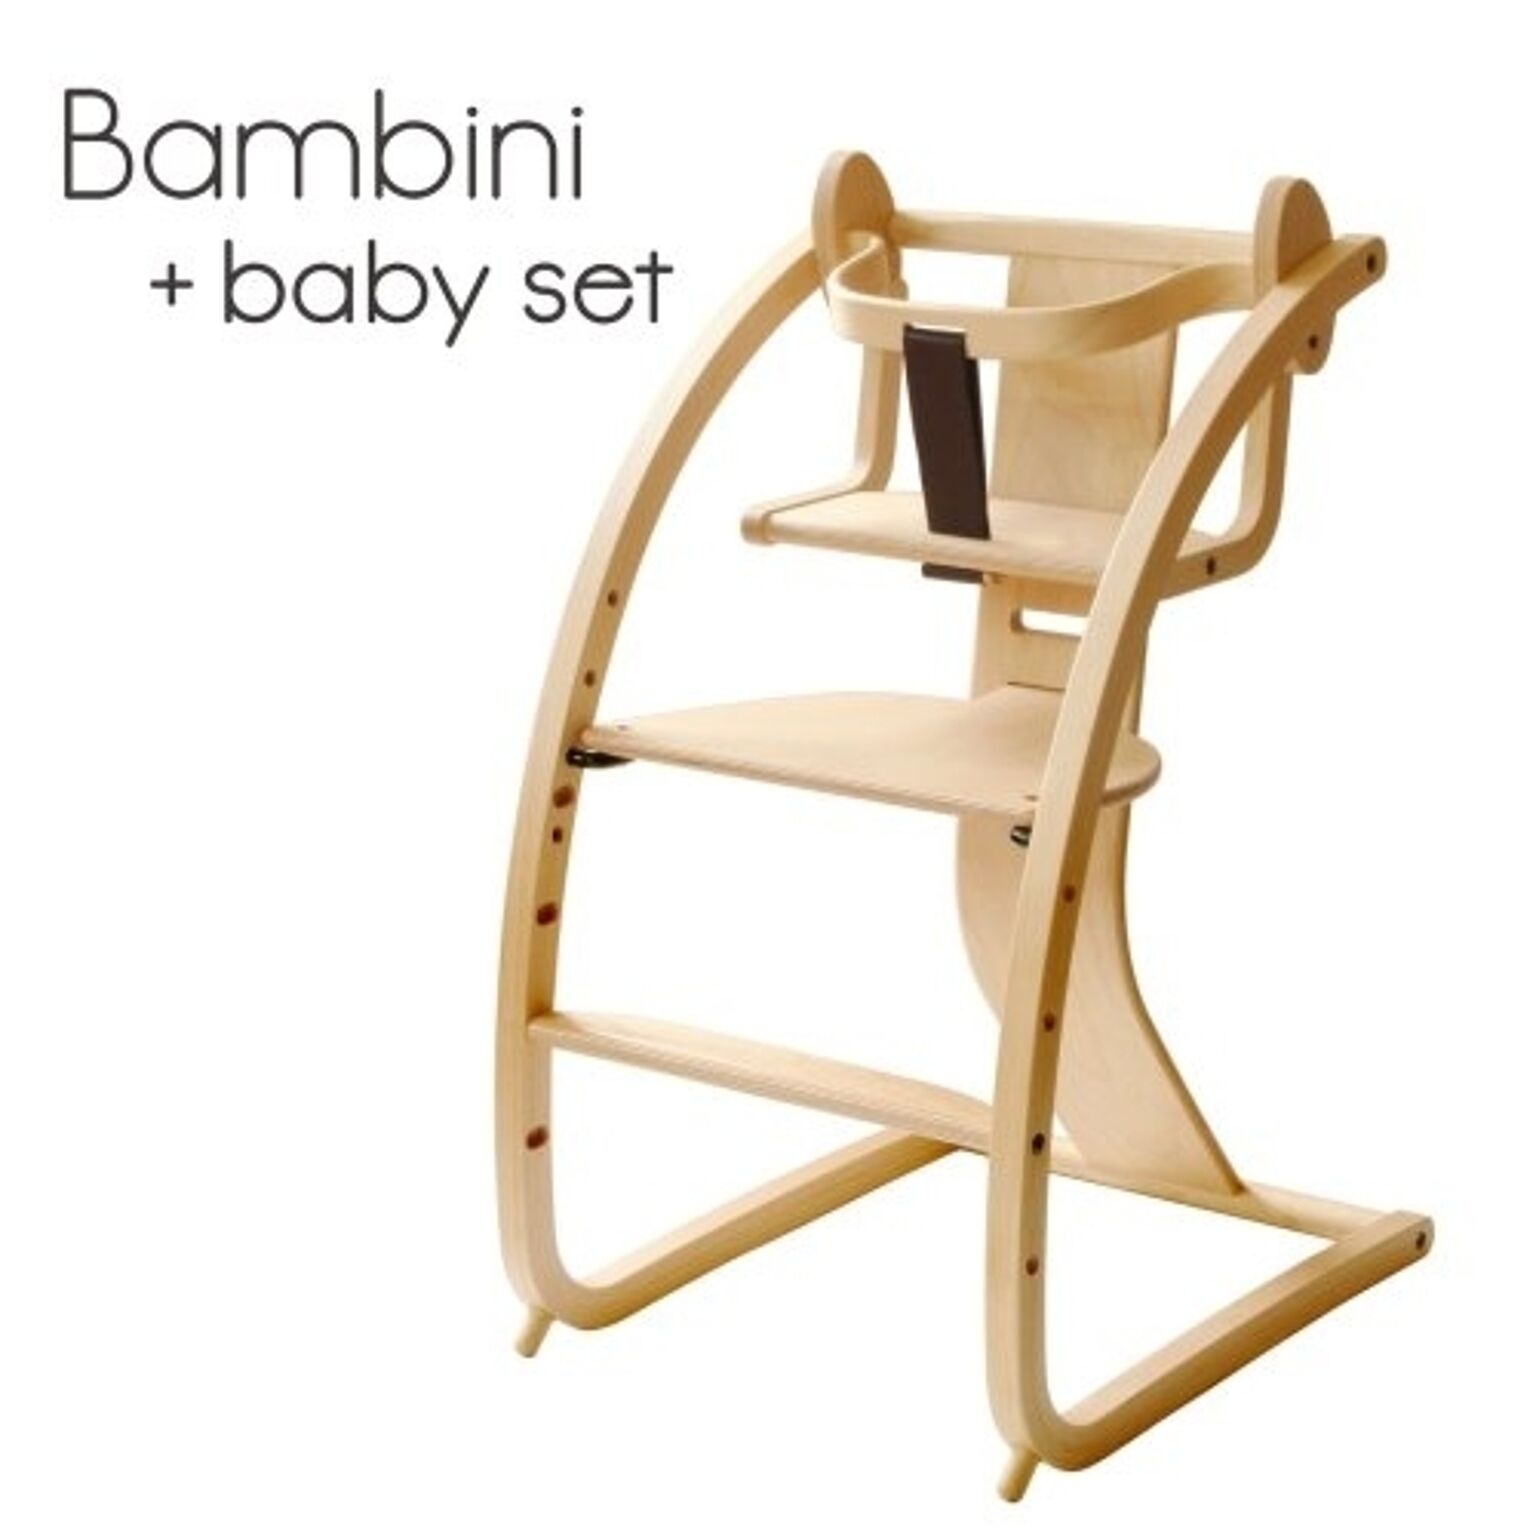  Bambini+baby set（バンビーニ+ベビーセット） STC-02 